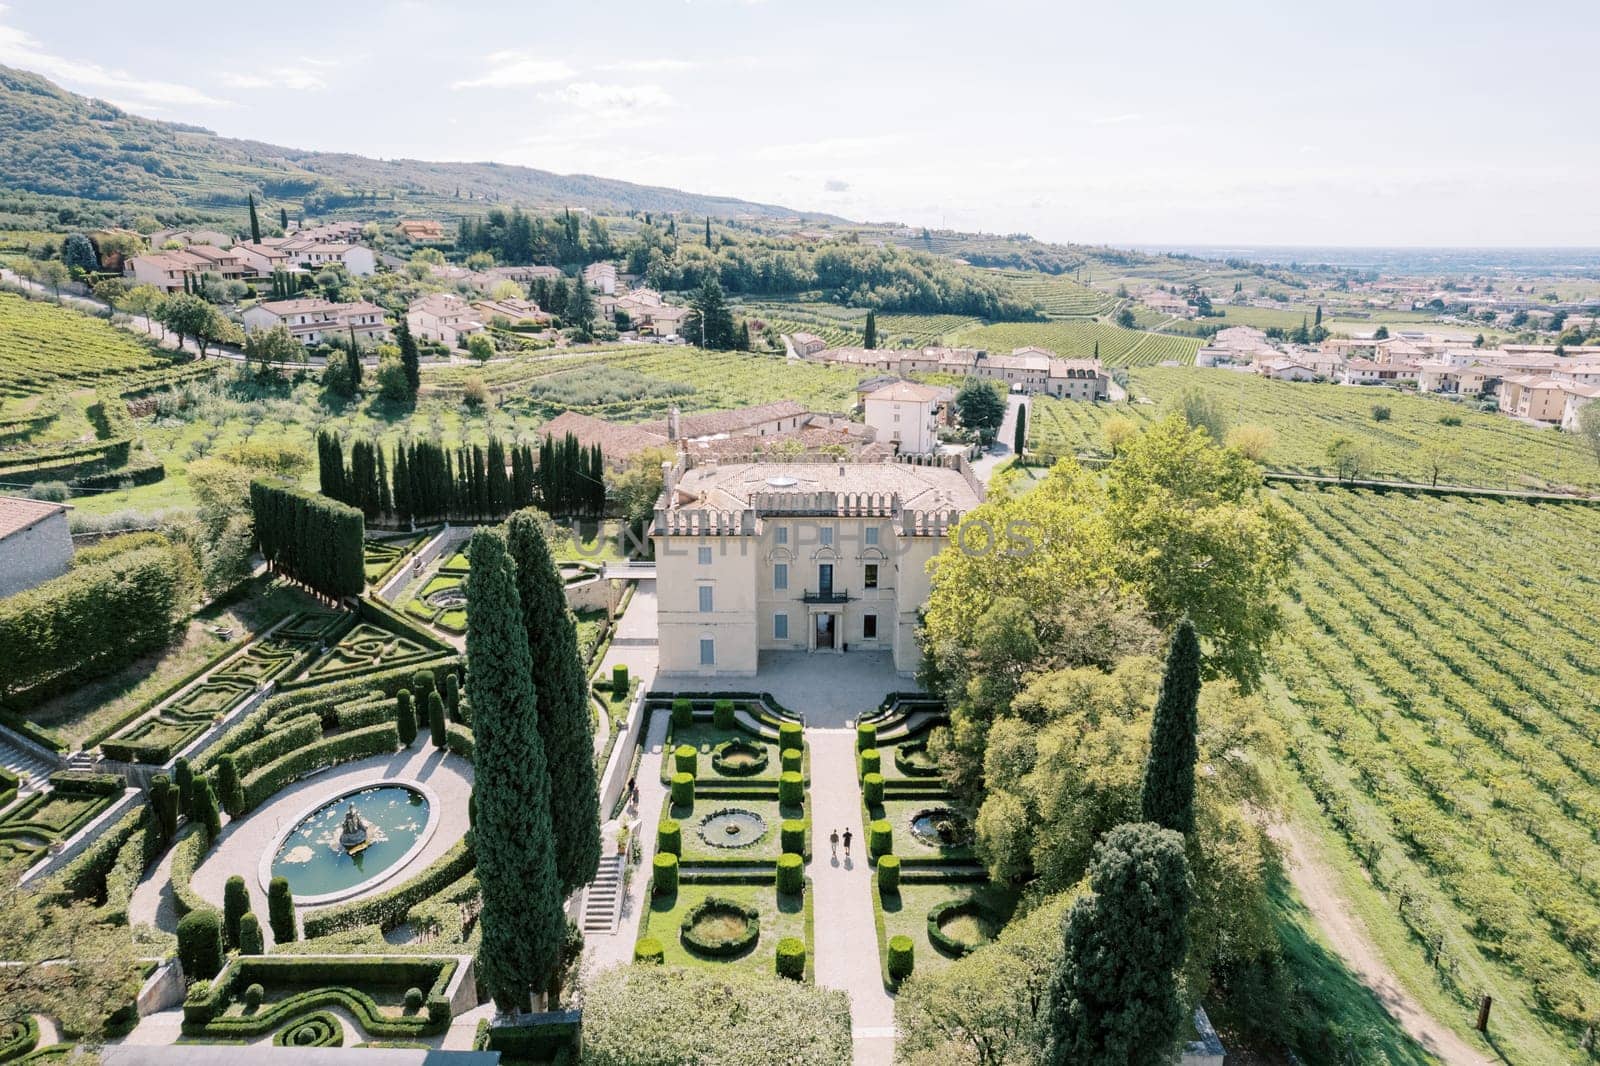 Luxurious green garden with fountains near Villa Rizzardi. Valpolicella, Verona, Italy. Drone by Nadtochiy